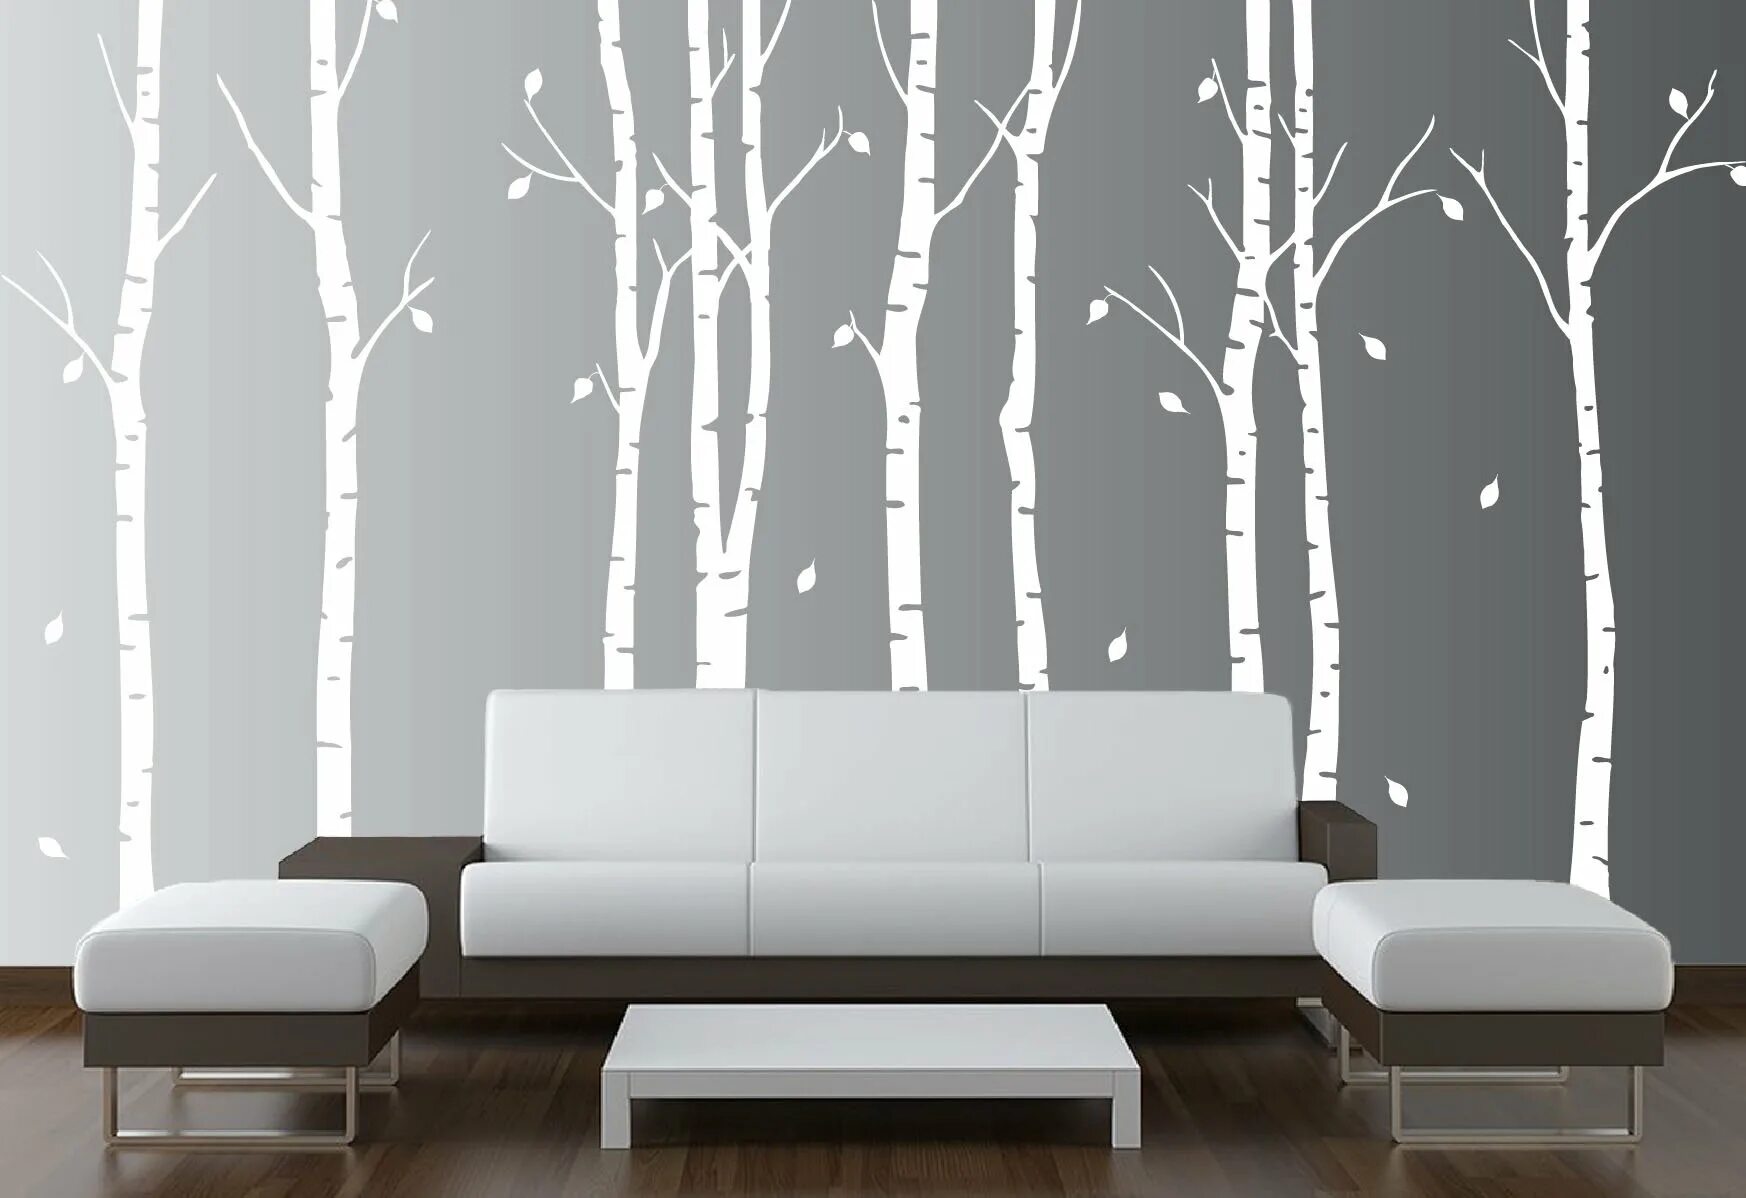 Фотообои дерево на стене. Береза на стене. Обои виниловые деревья. Обои с деревьями на стену. Обои на стену лес